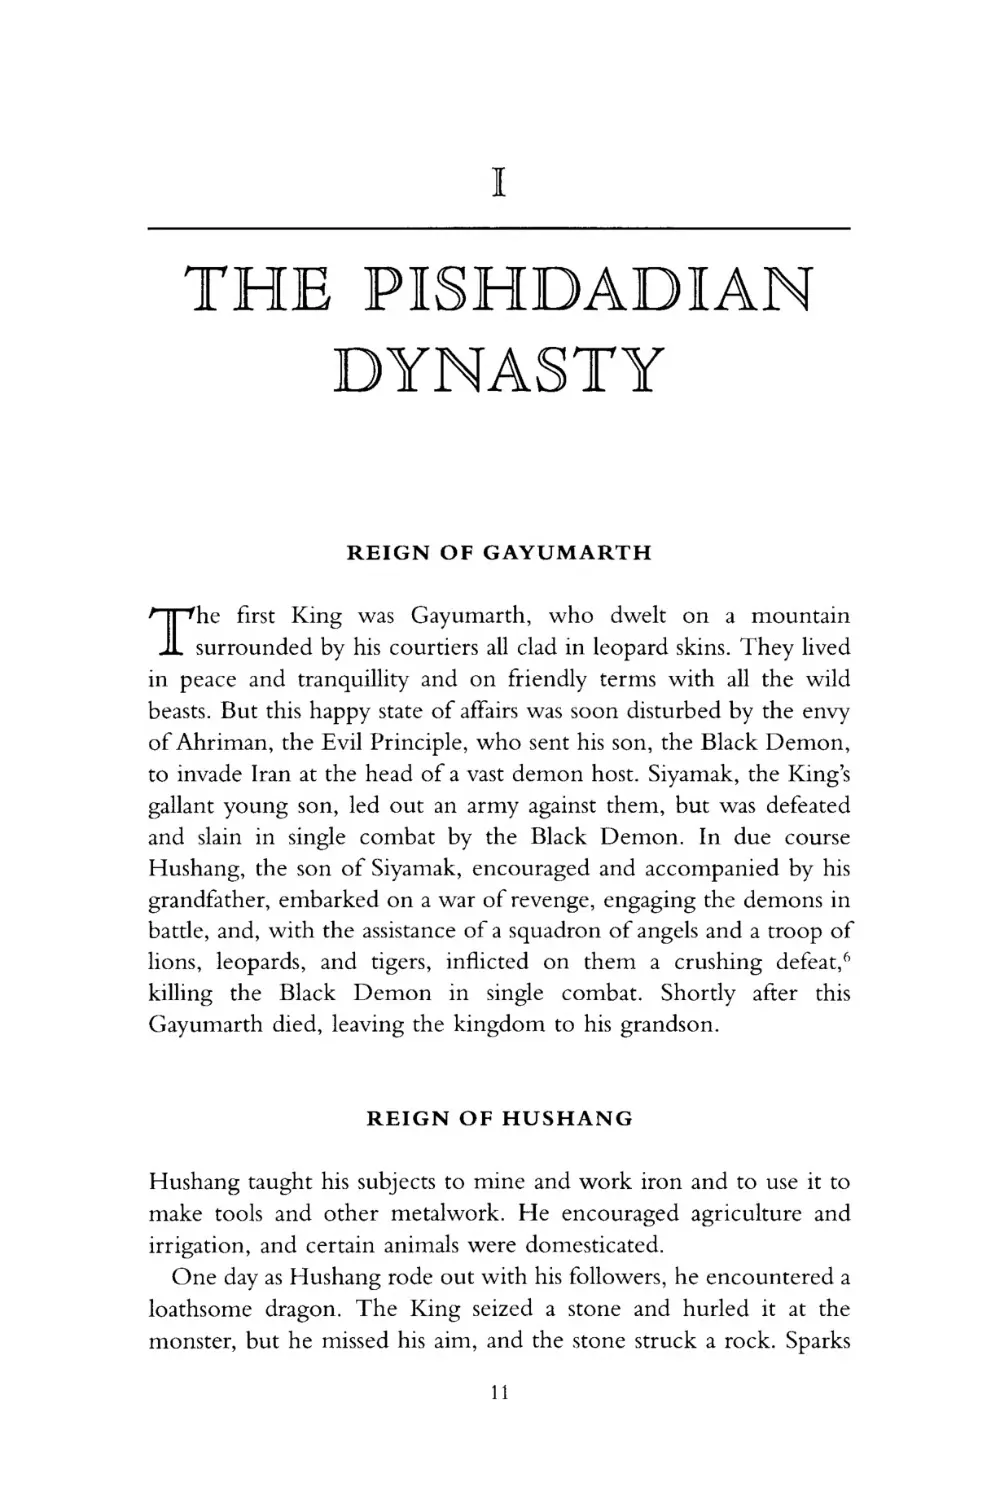 I THE PISHDADIAN DYNASTY
REIGN OF GAYUMARTH
REIGN OF HUSHANG